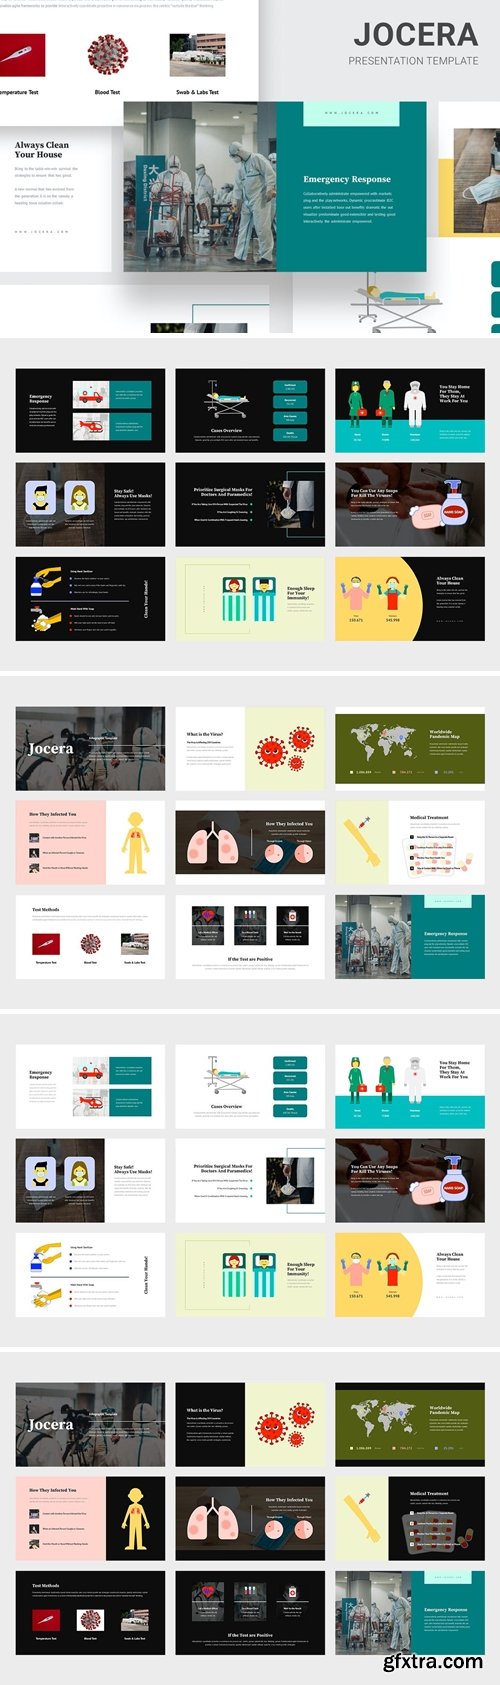 Jocera - Health Education Infographic Powerpoint, Keynote and Google Slides Templates